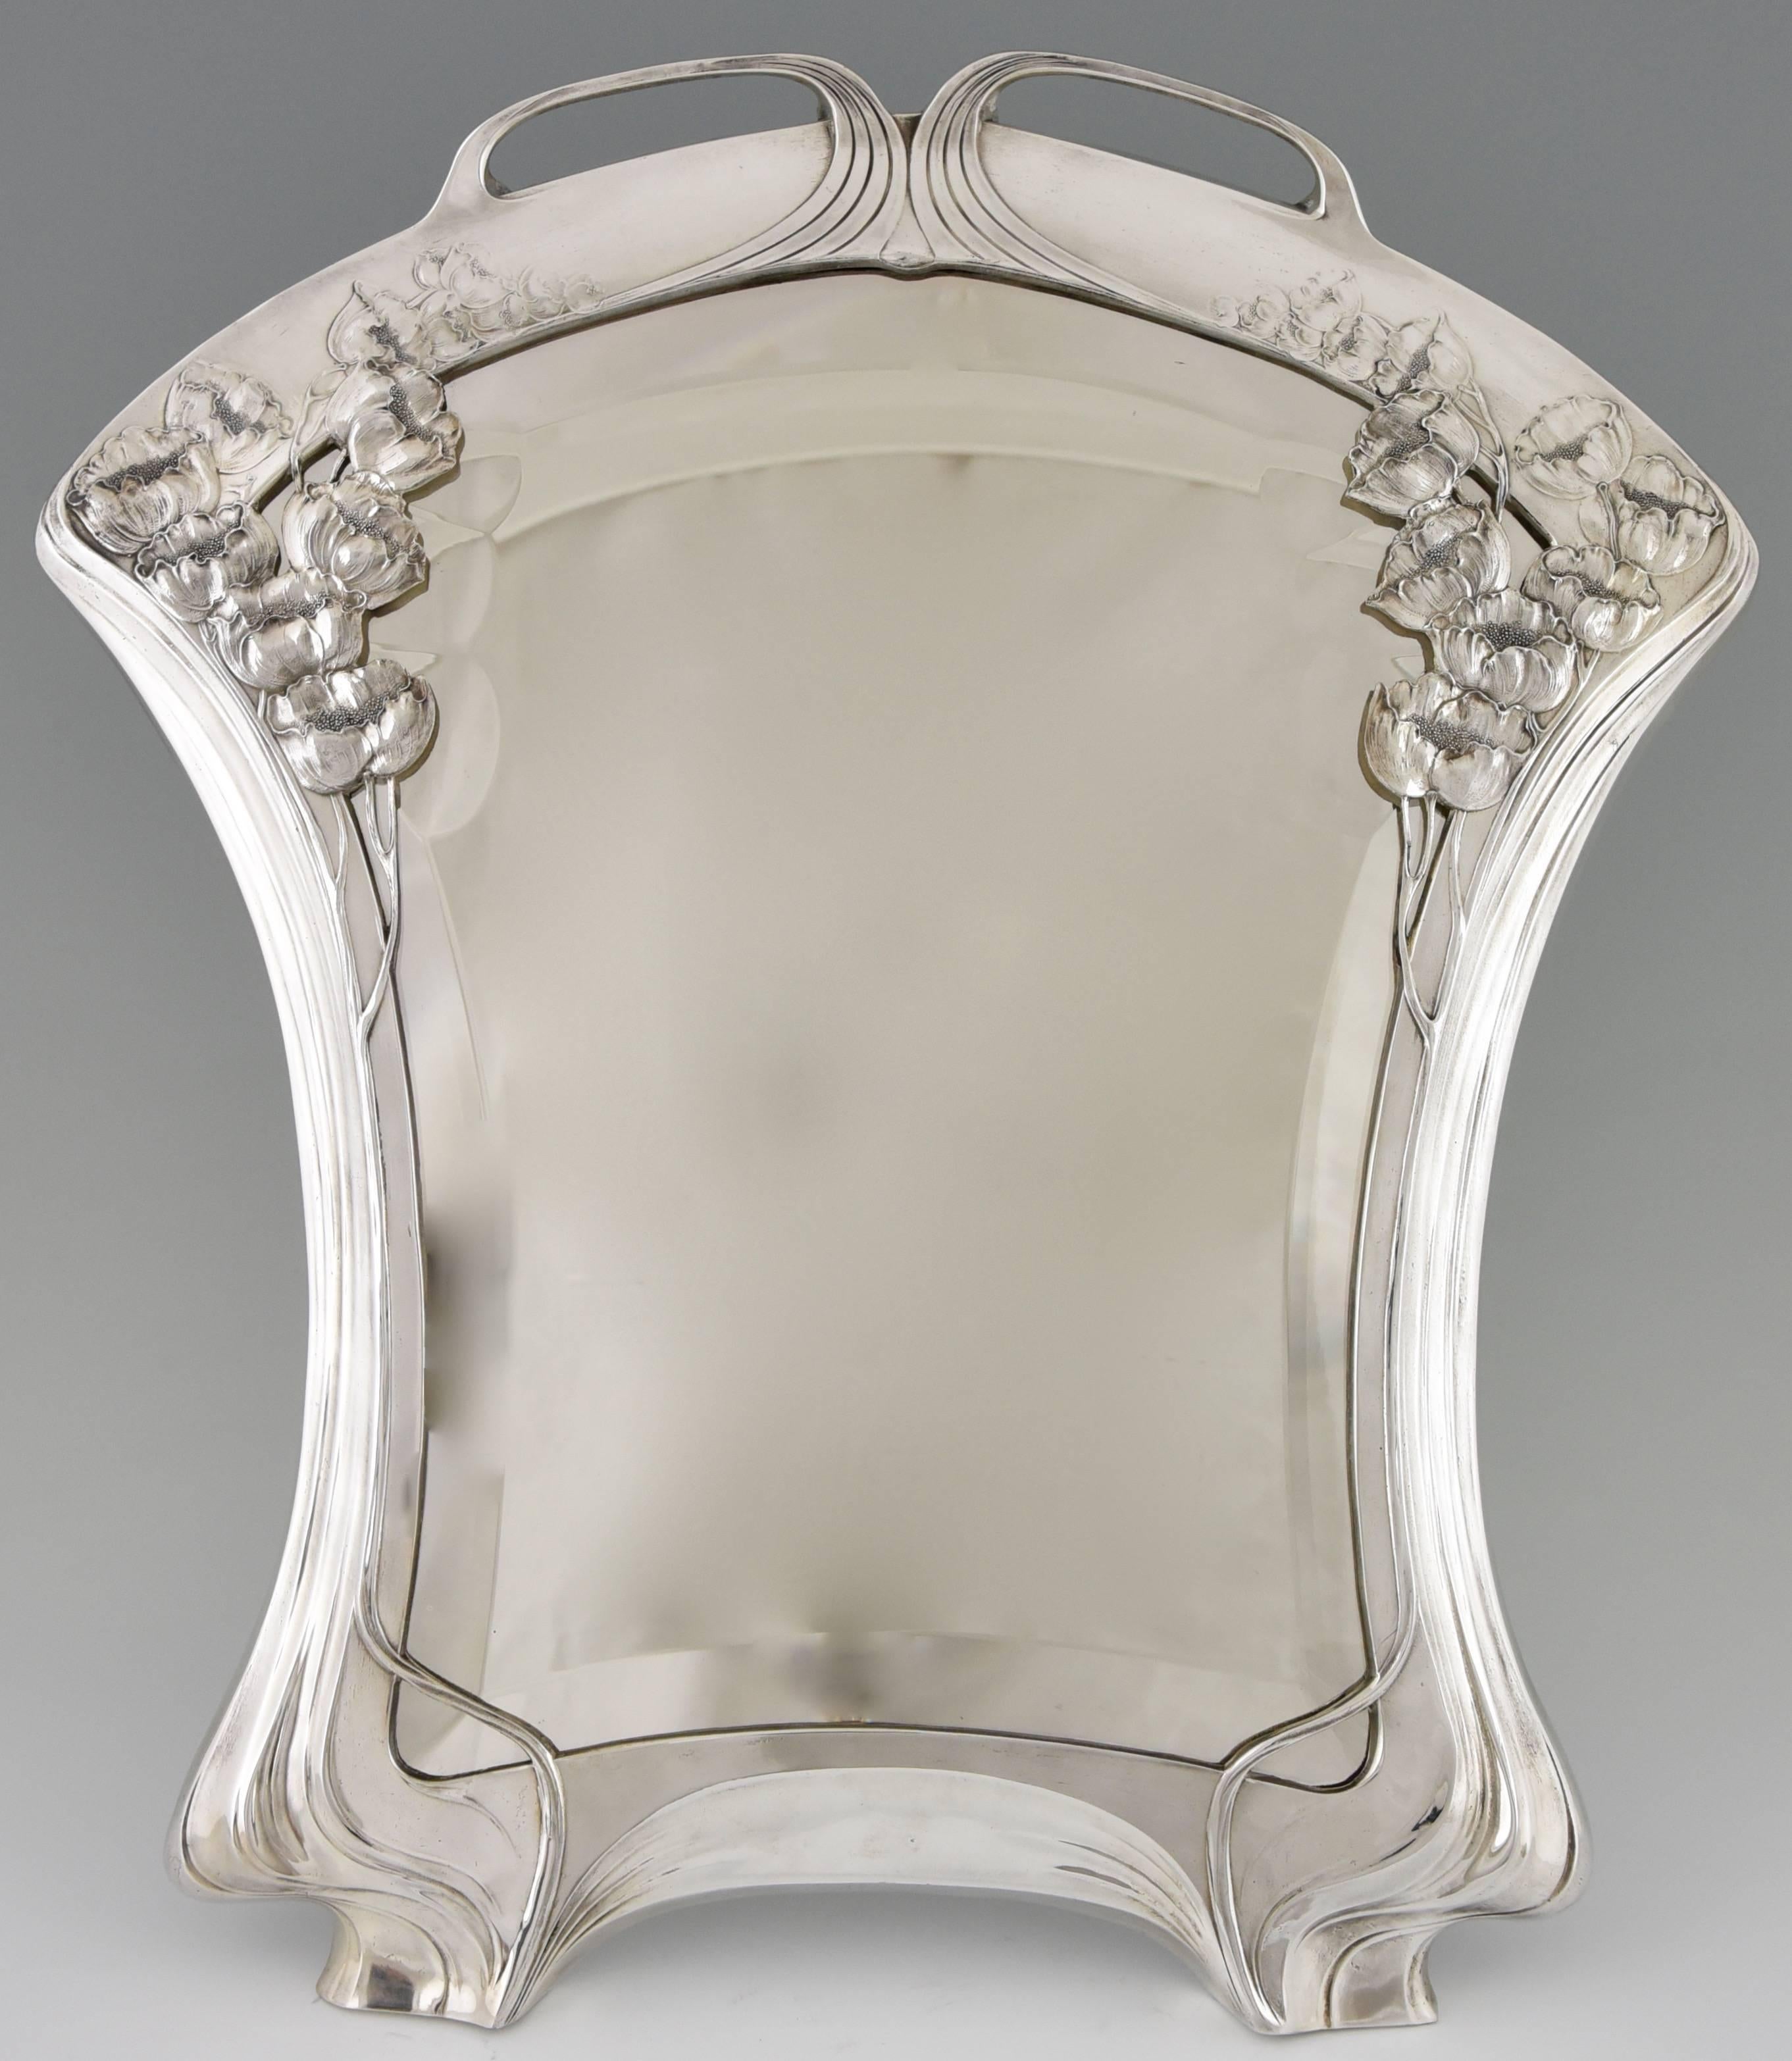 Beveled Silvered Art Nouveau mirror by Orivit beveled glass, Germany 1904.